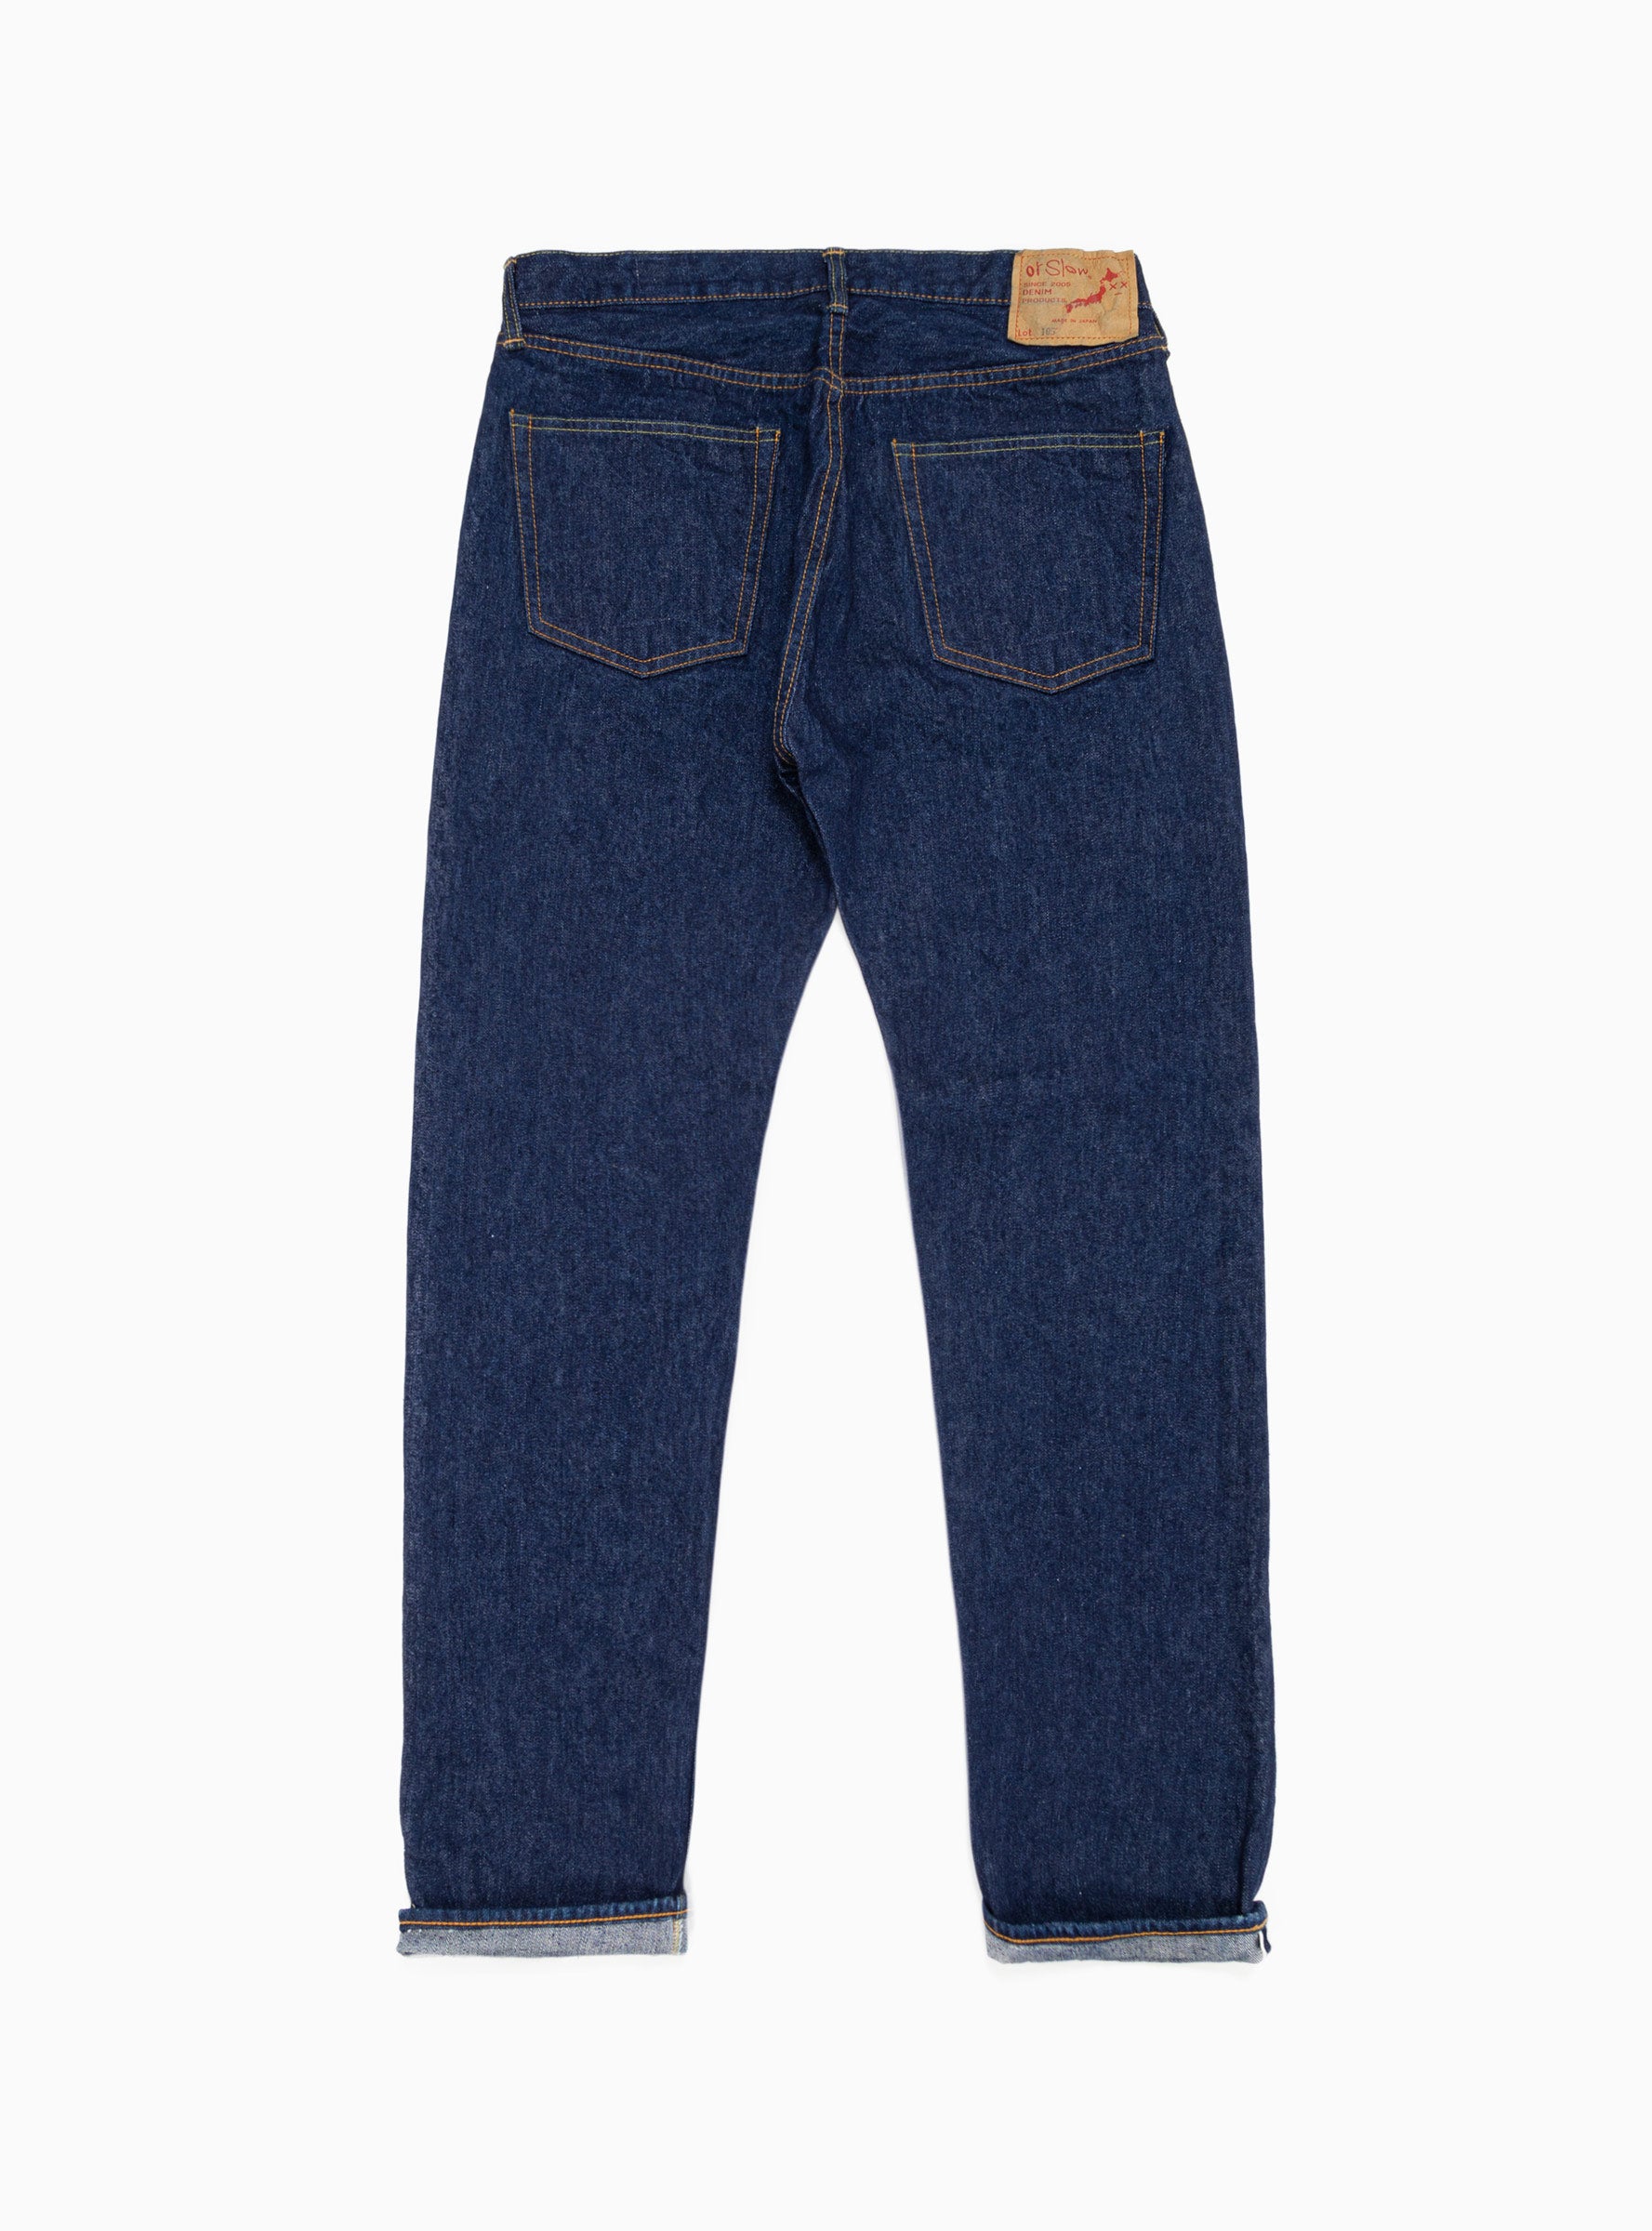 90s Original Straight Fit Selvedge Jeans